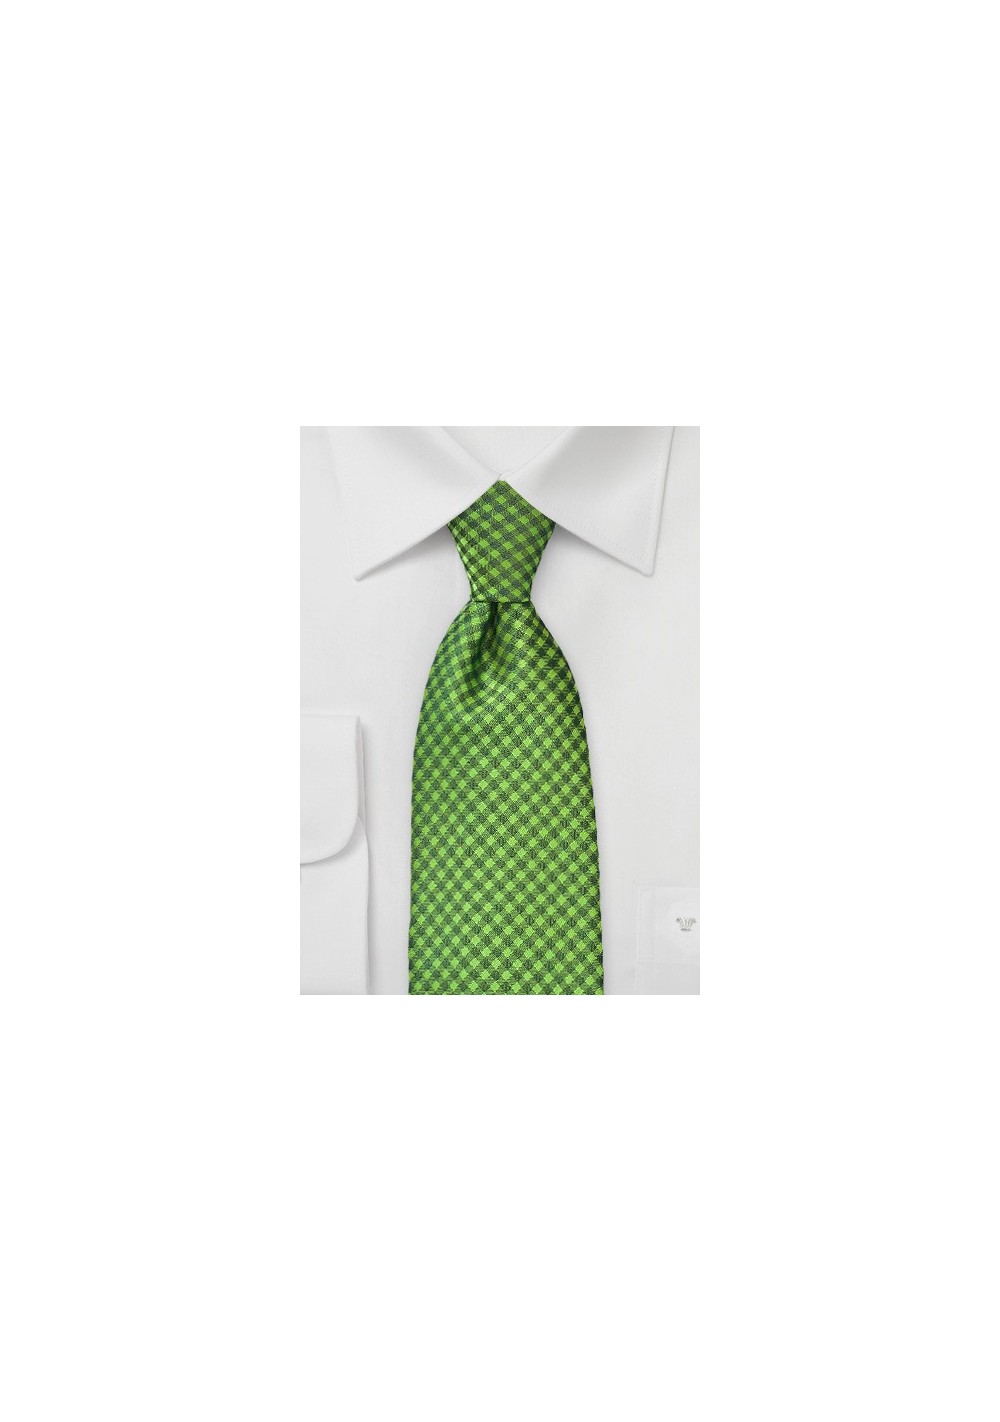 Sycamore Green Checkered Tie